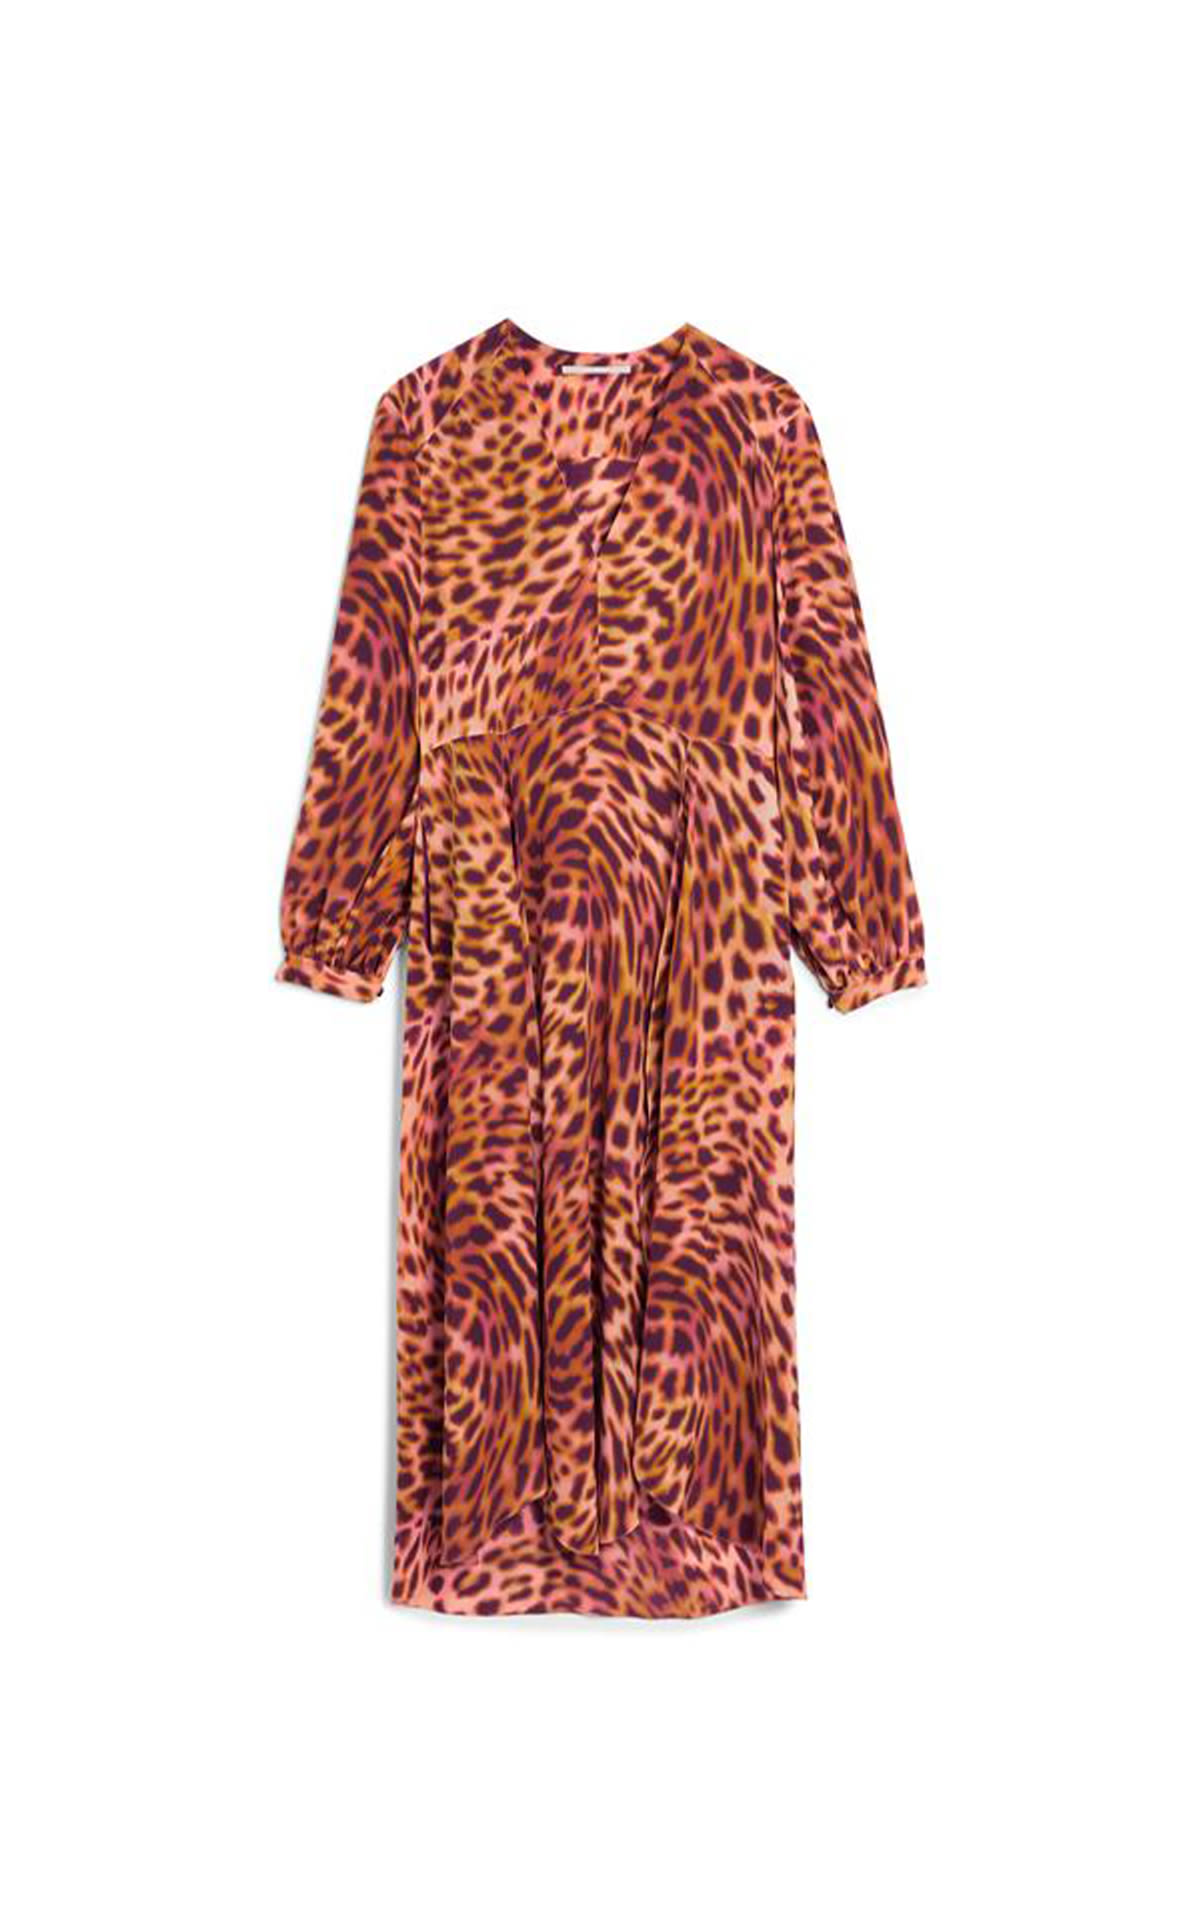 Stella McCartney Silk cheetah print dress from Bicester Village